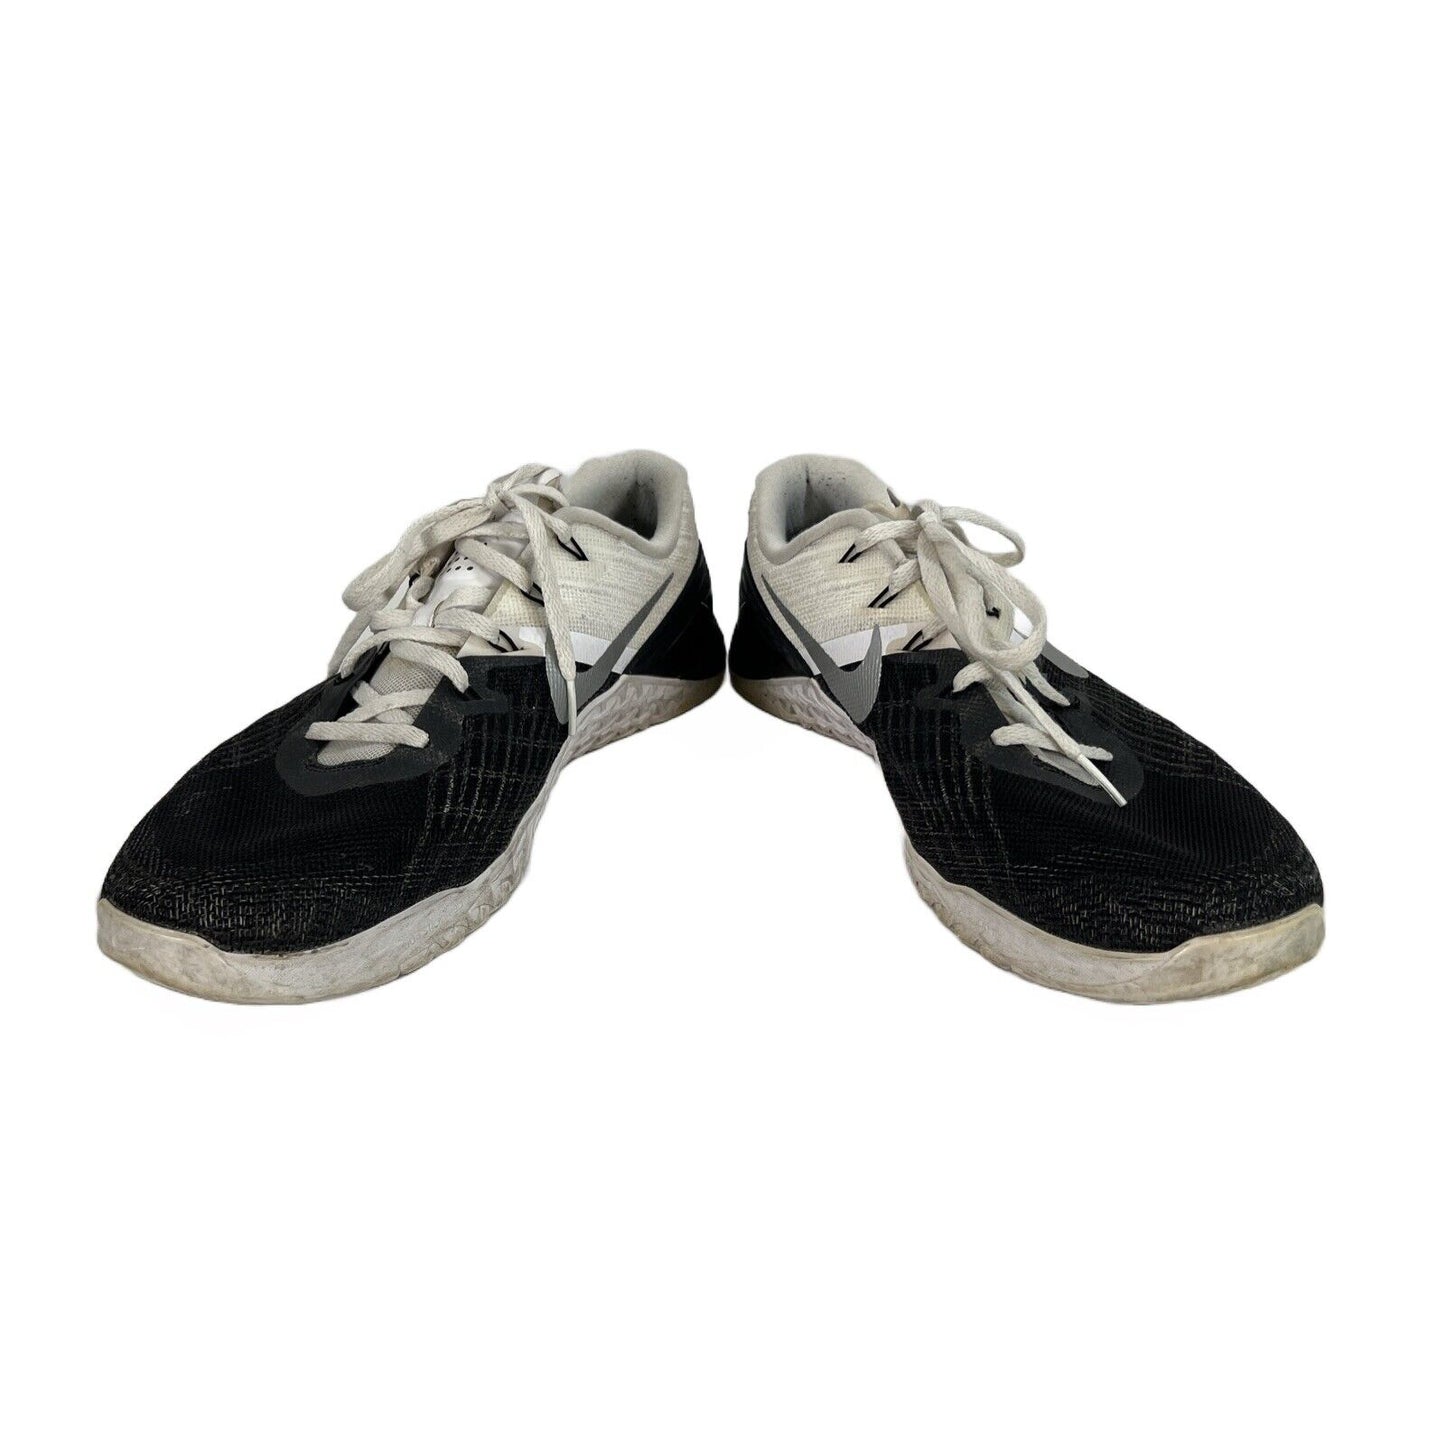 Nike Men's Black/White Metcon 3 Training Athletic Shoes - 10.5